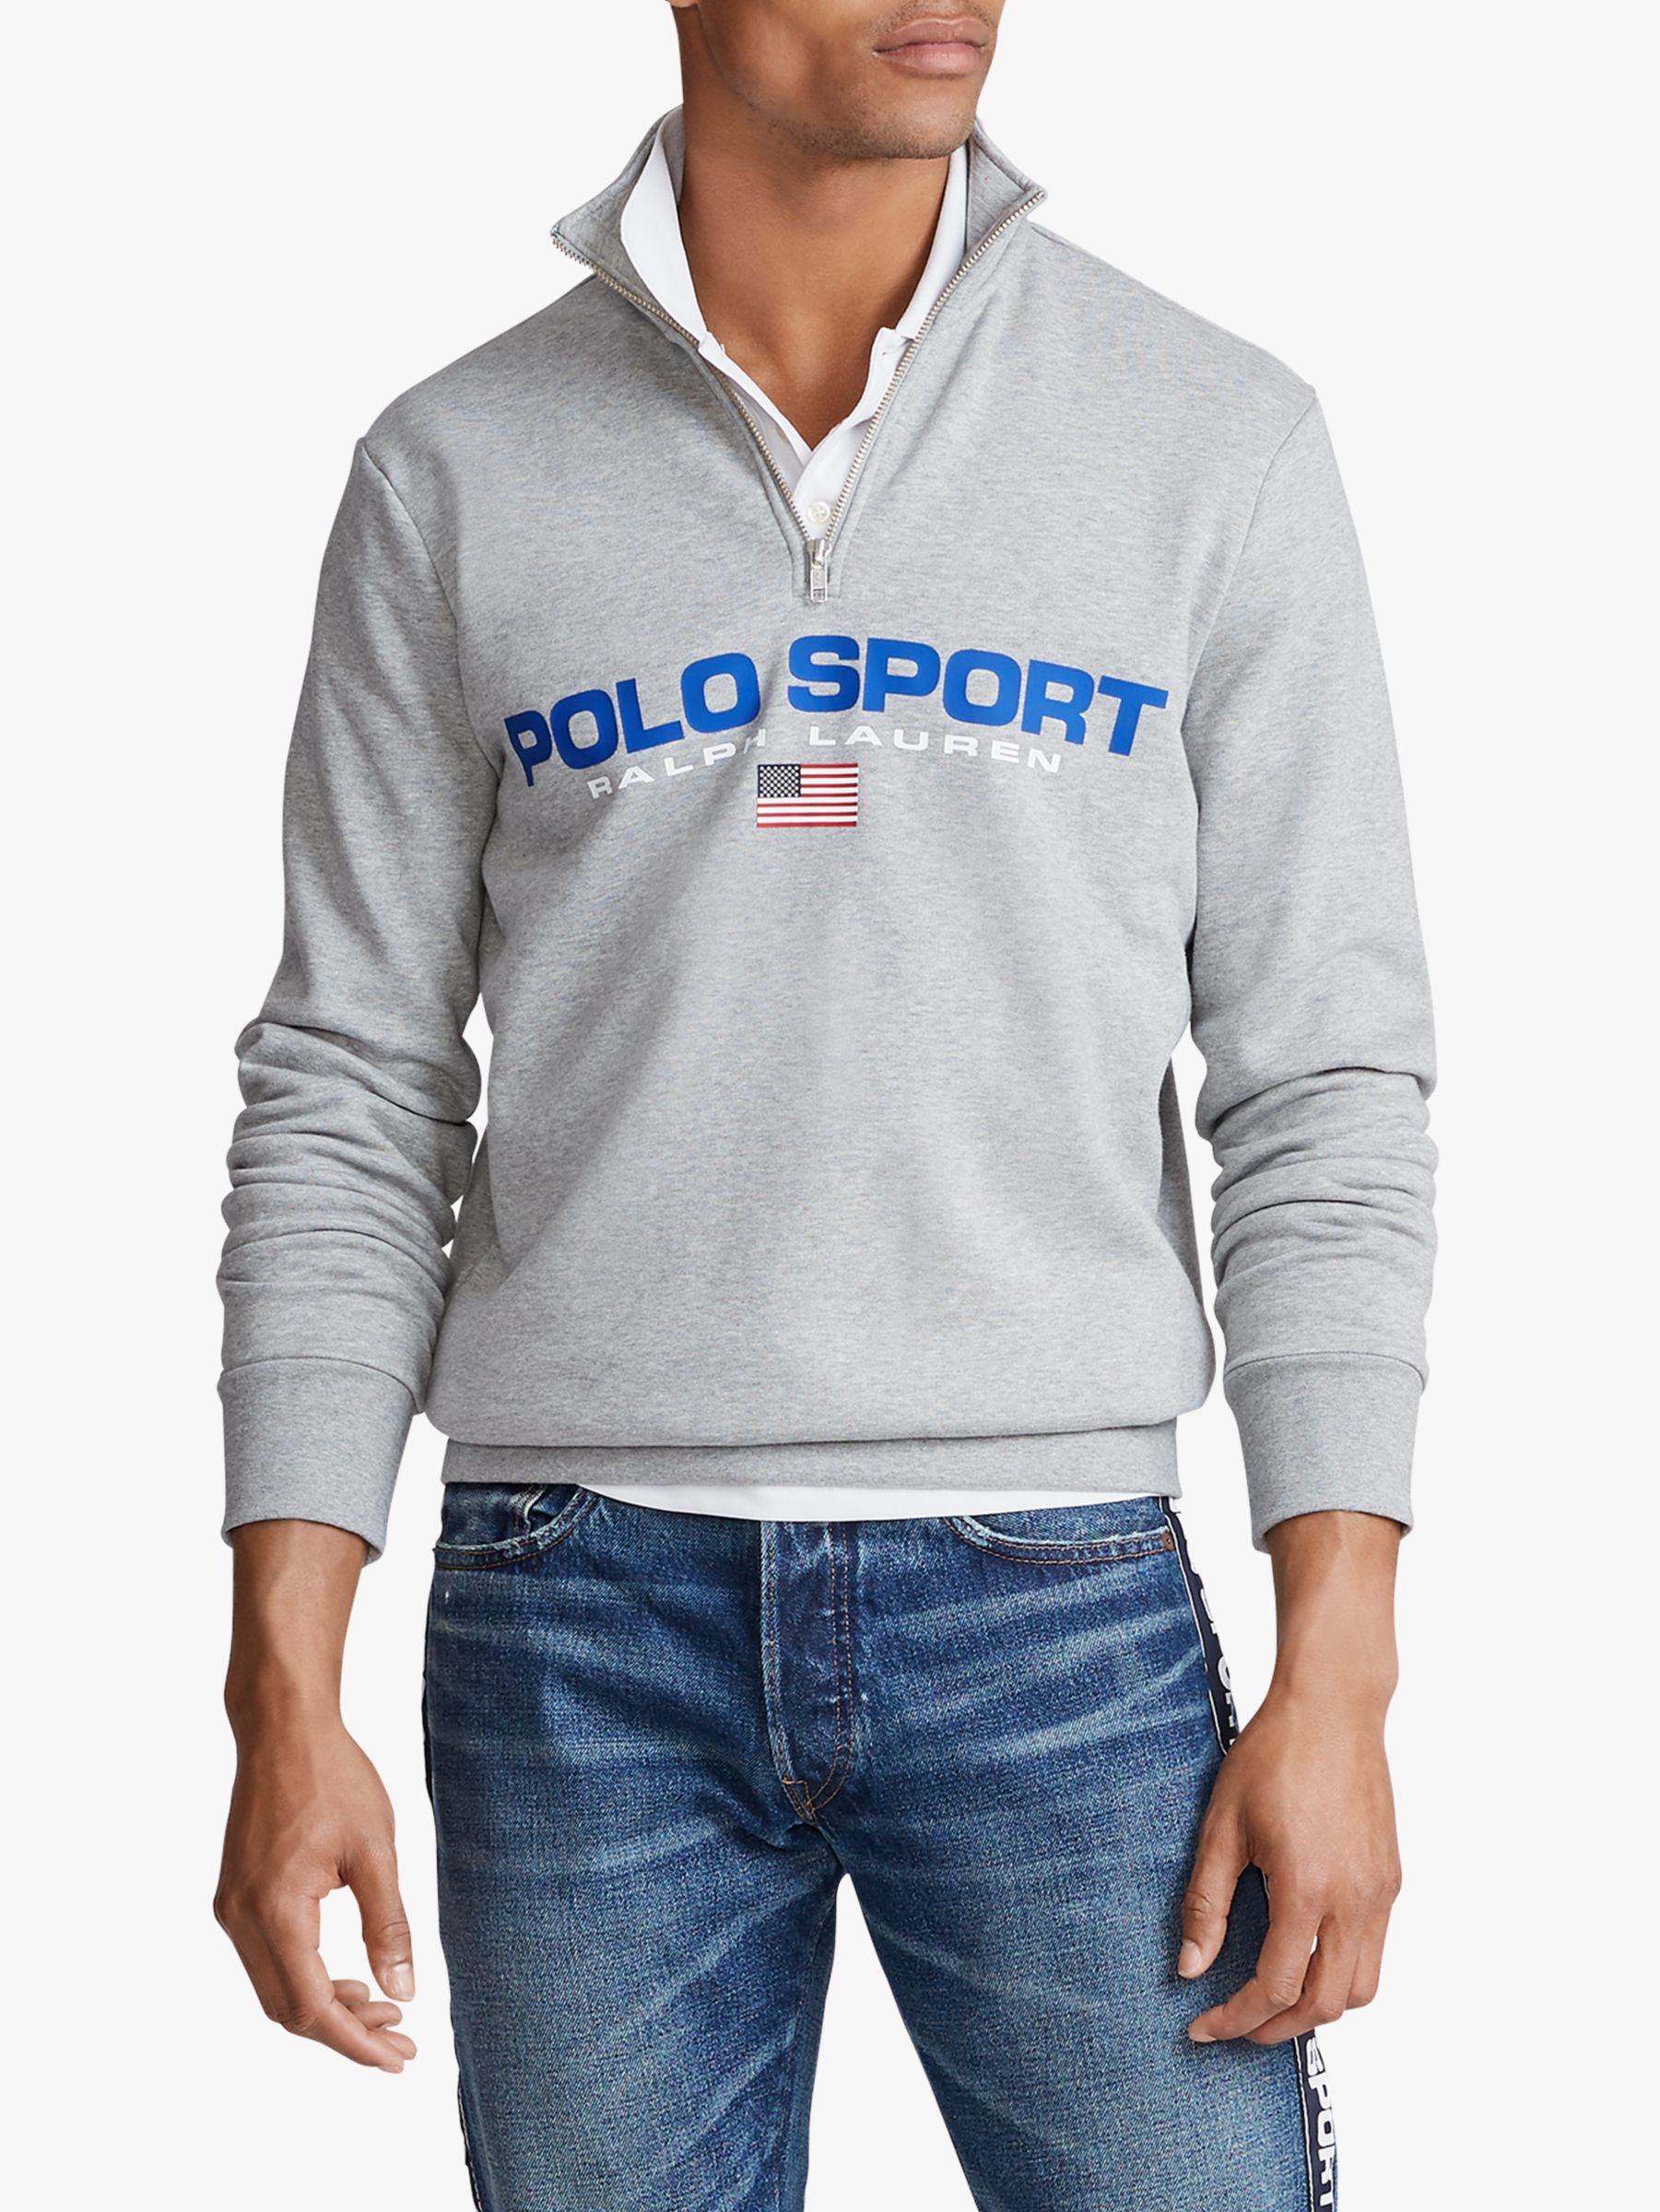 polo sport half zip